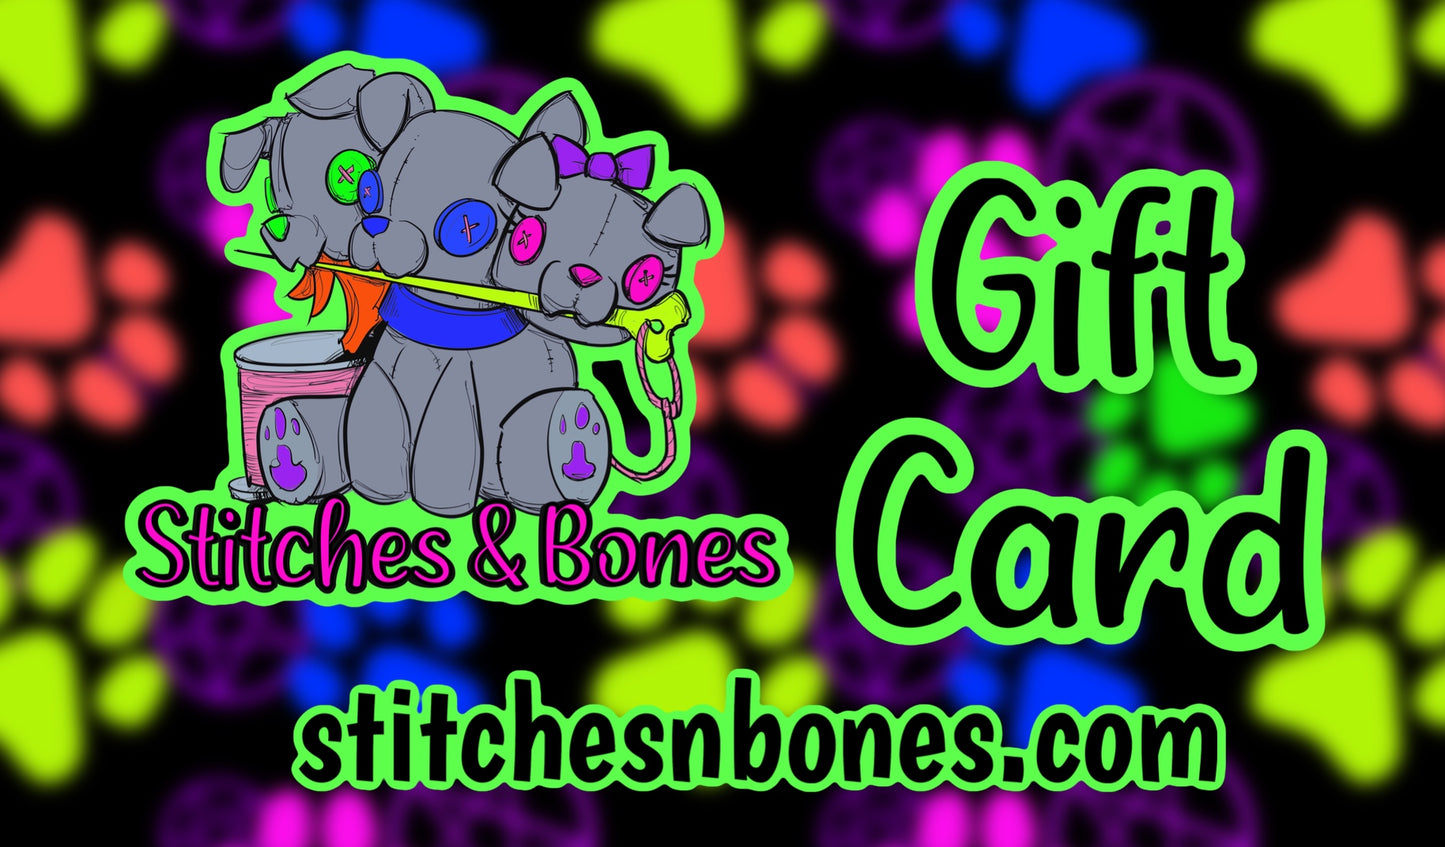 Stitches & Bones Gift Card